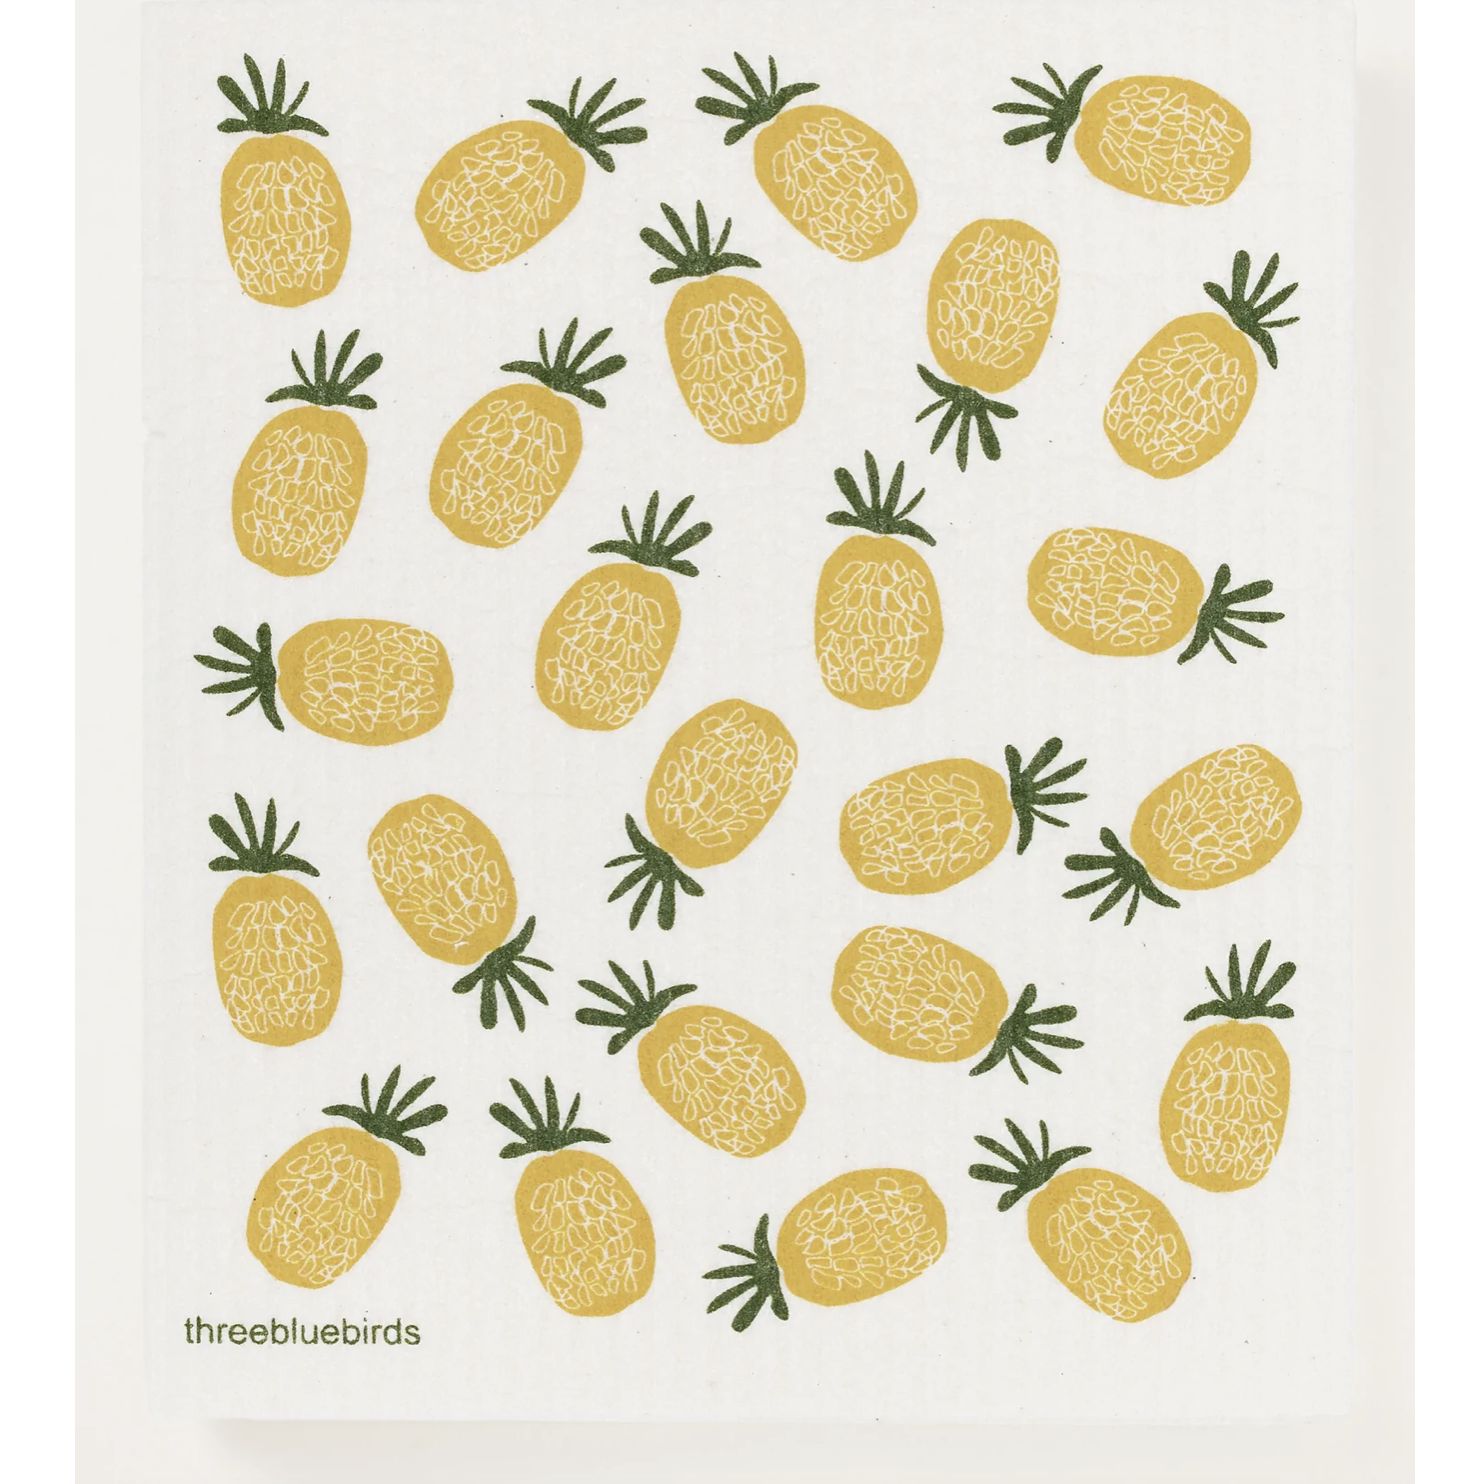 Swedish Dishcloth - Pineapples